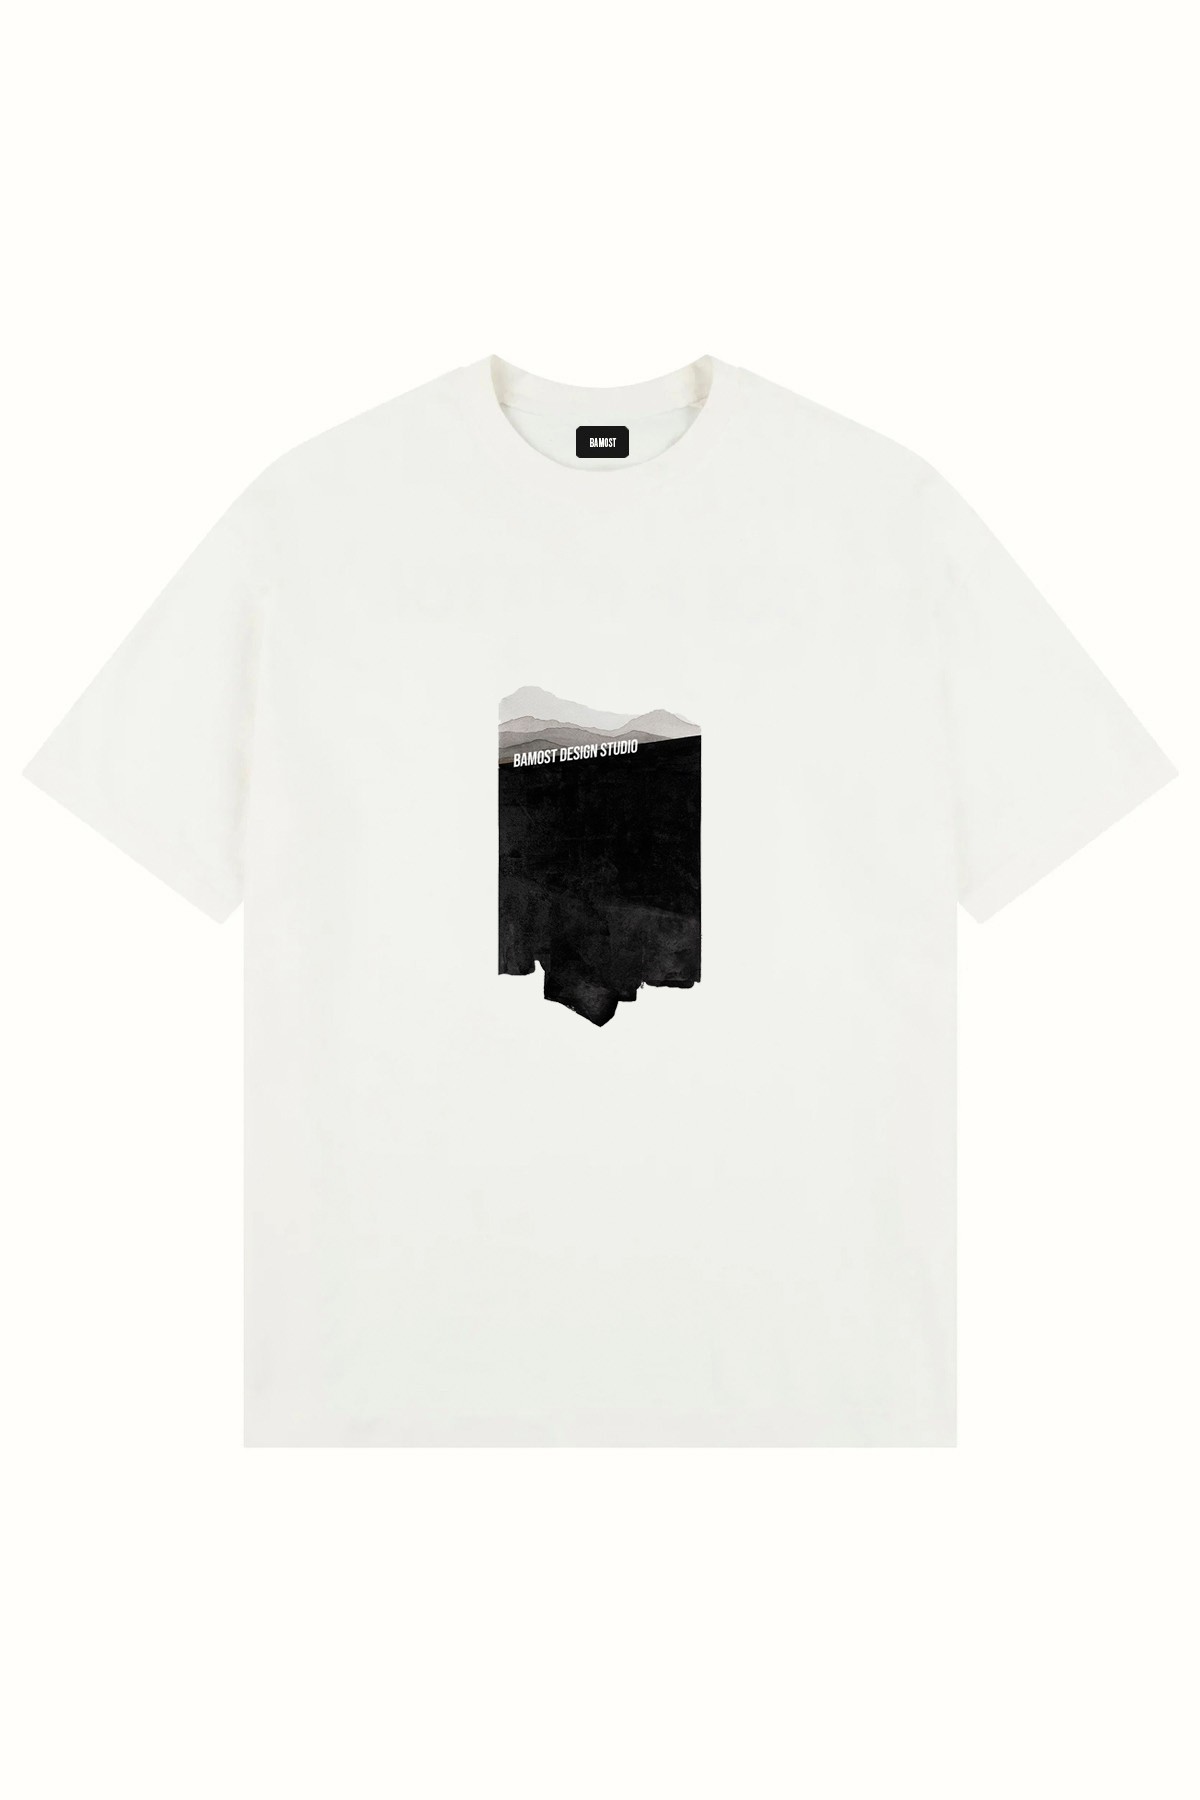 2019 - Oversize Printed T-Shirt